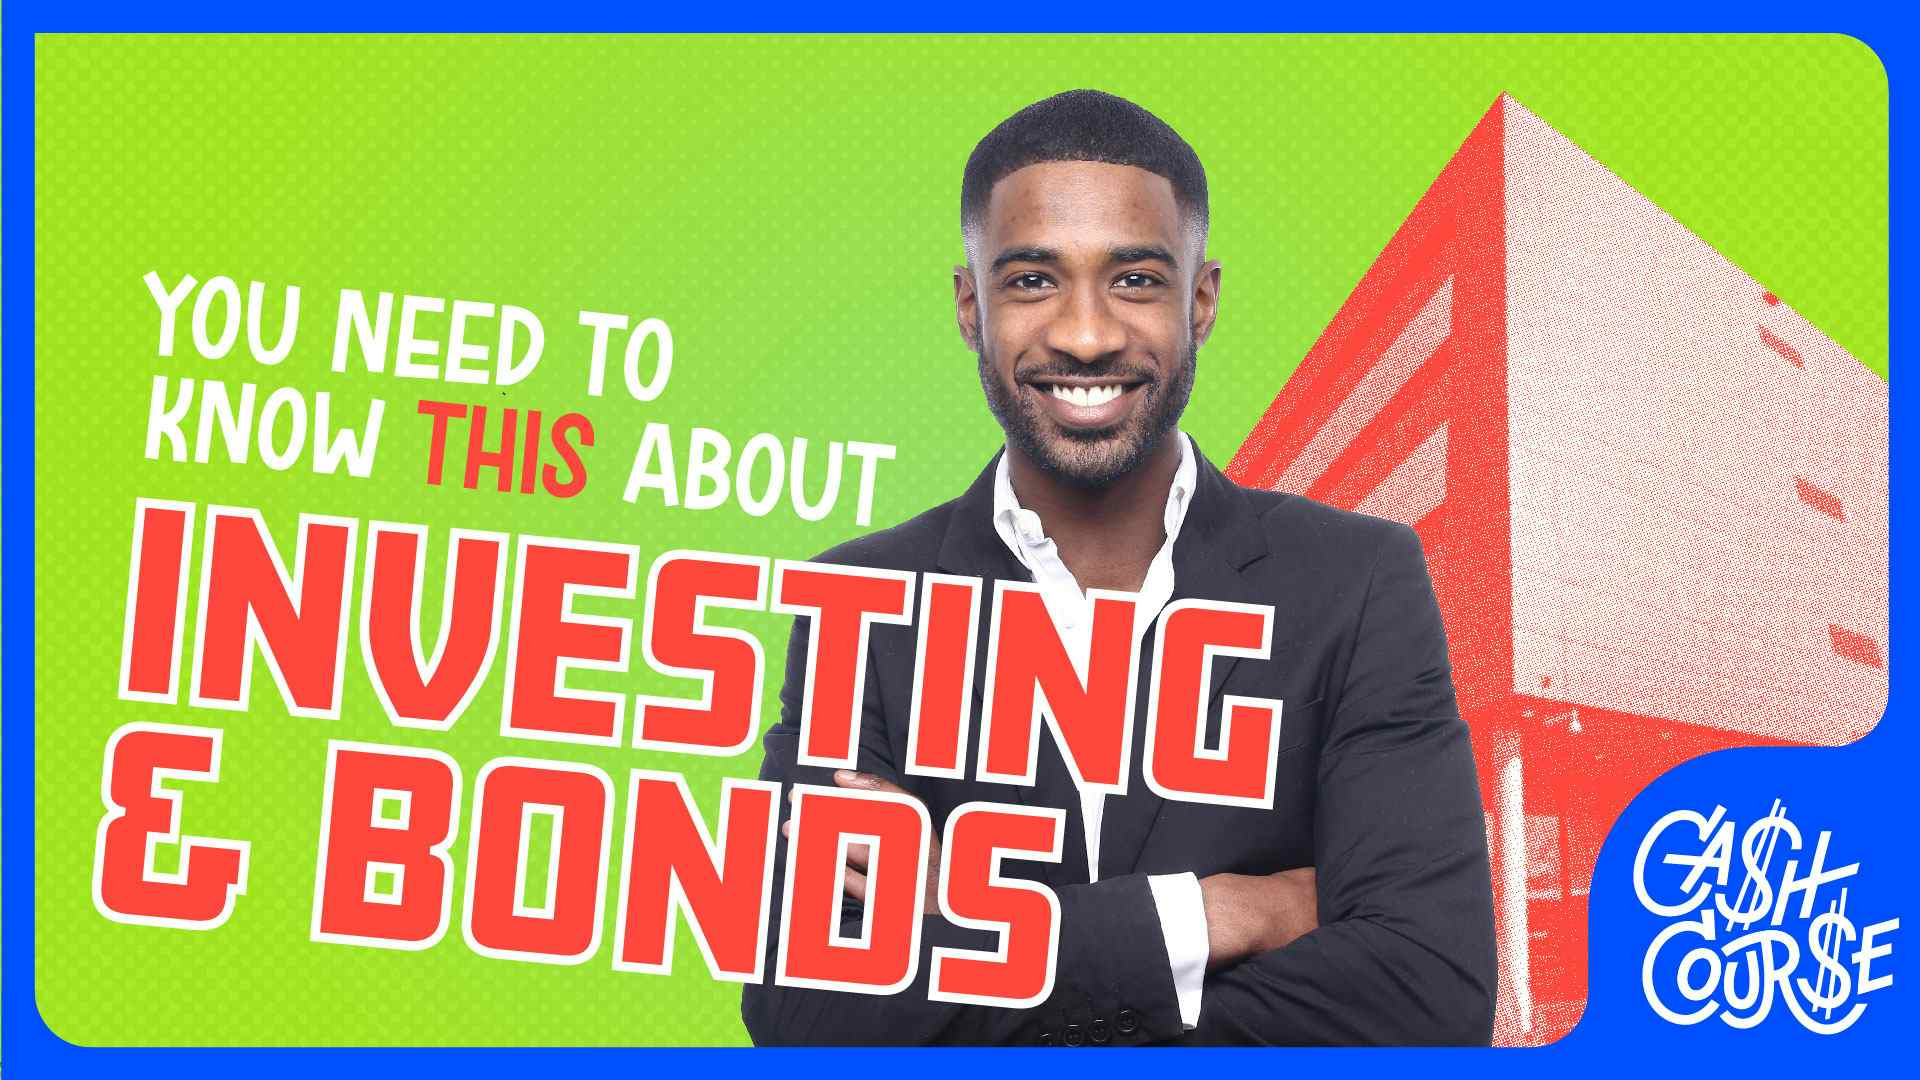 Investing & Bonds